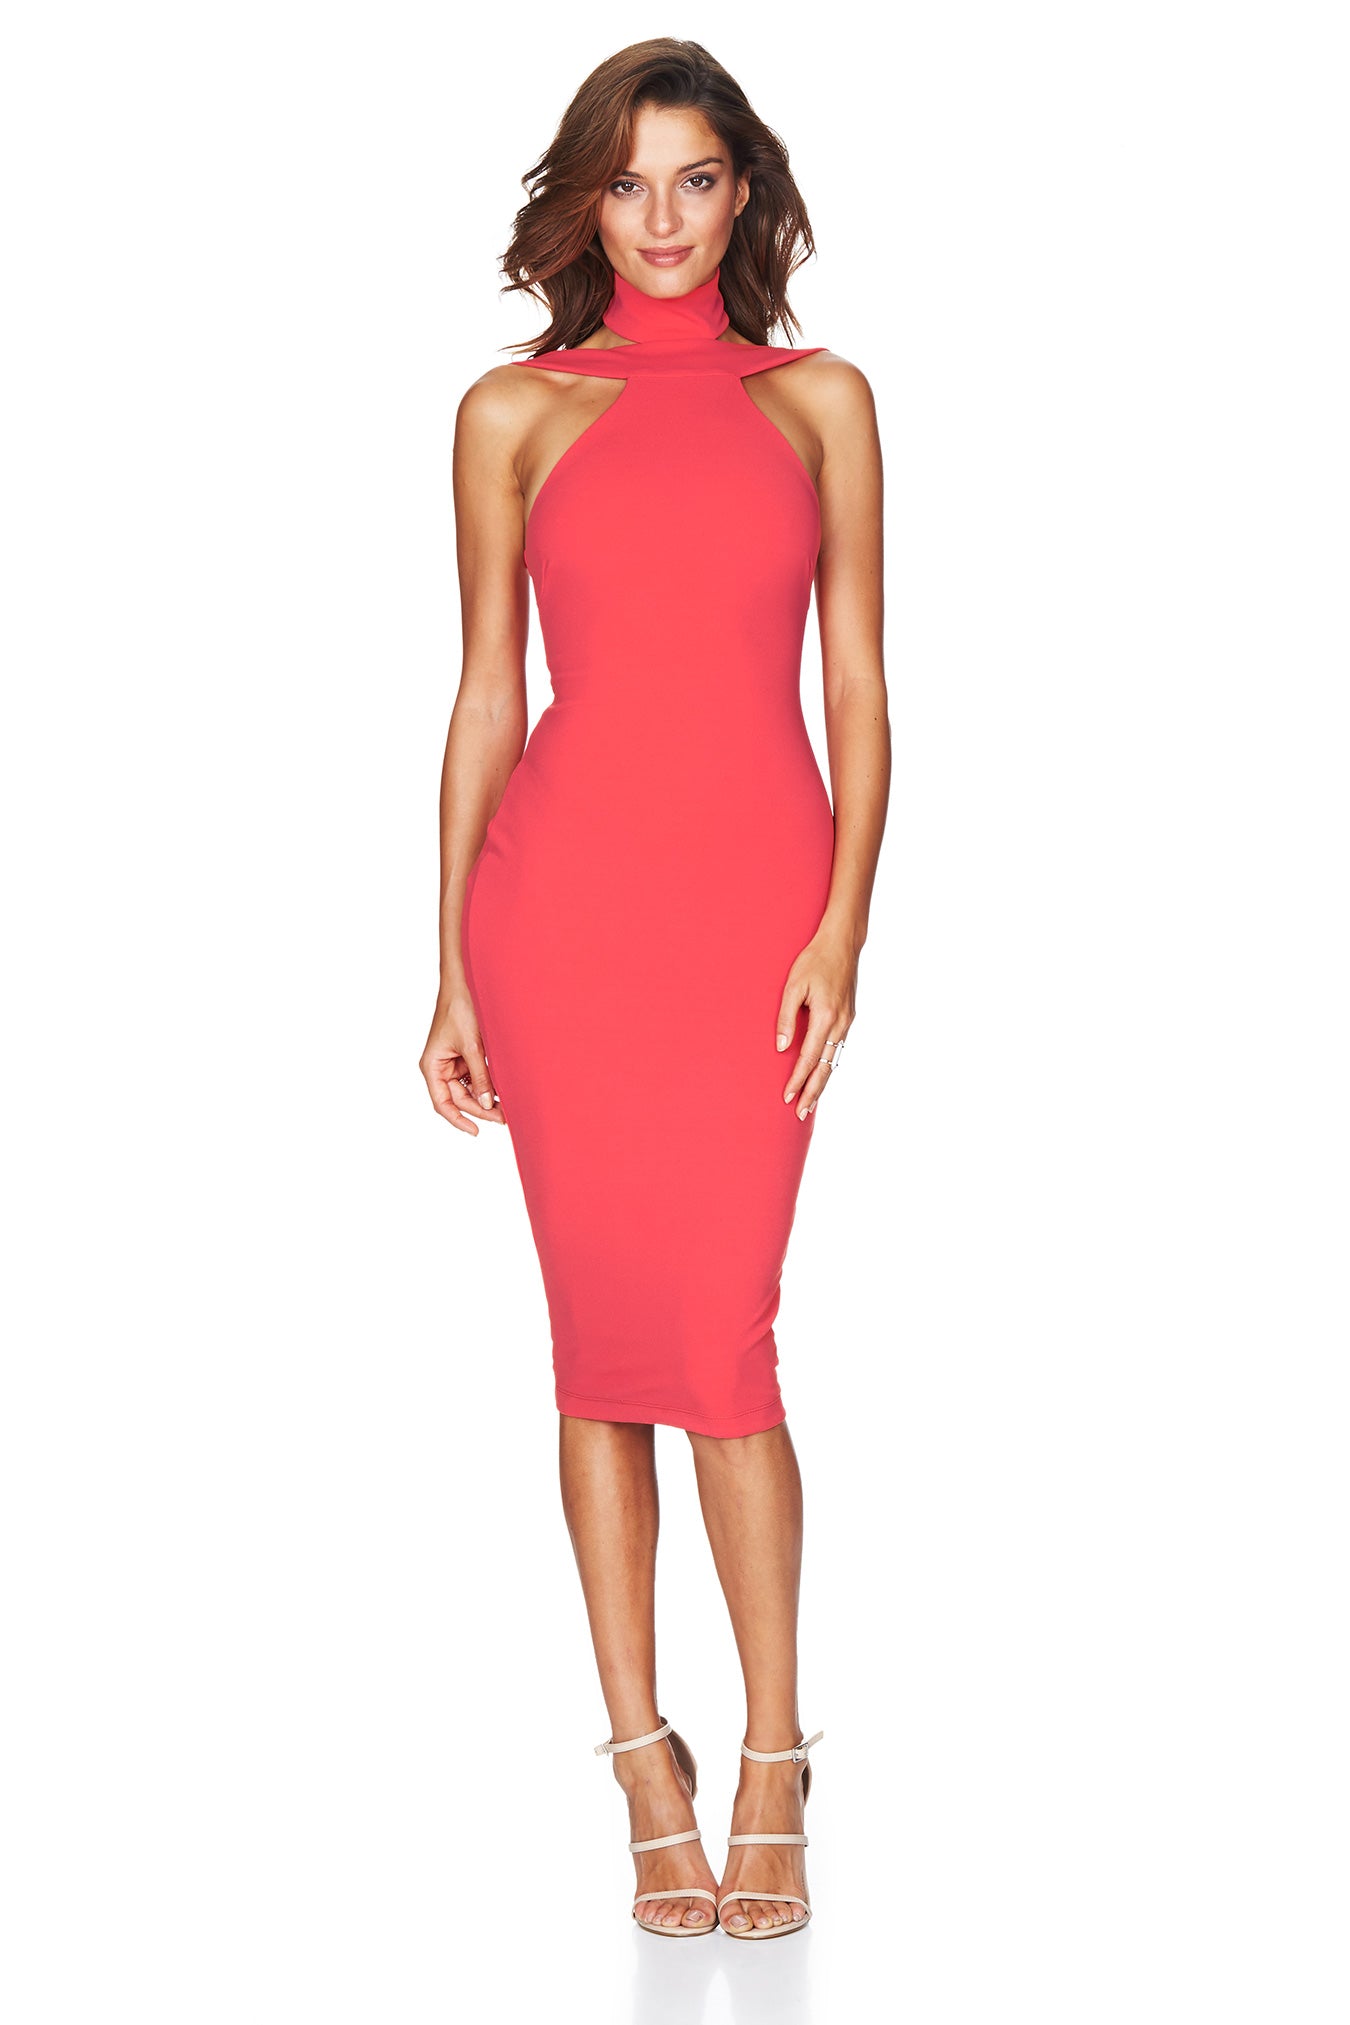 Nookie Celestial Midi Dress. salmon pink dress high neck cut out shoulders midi length